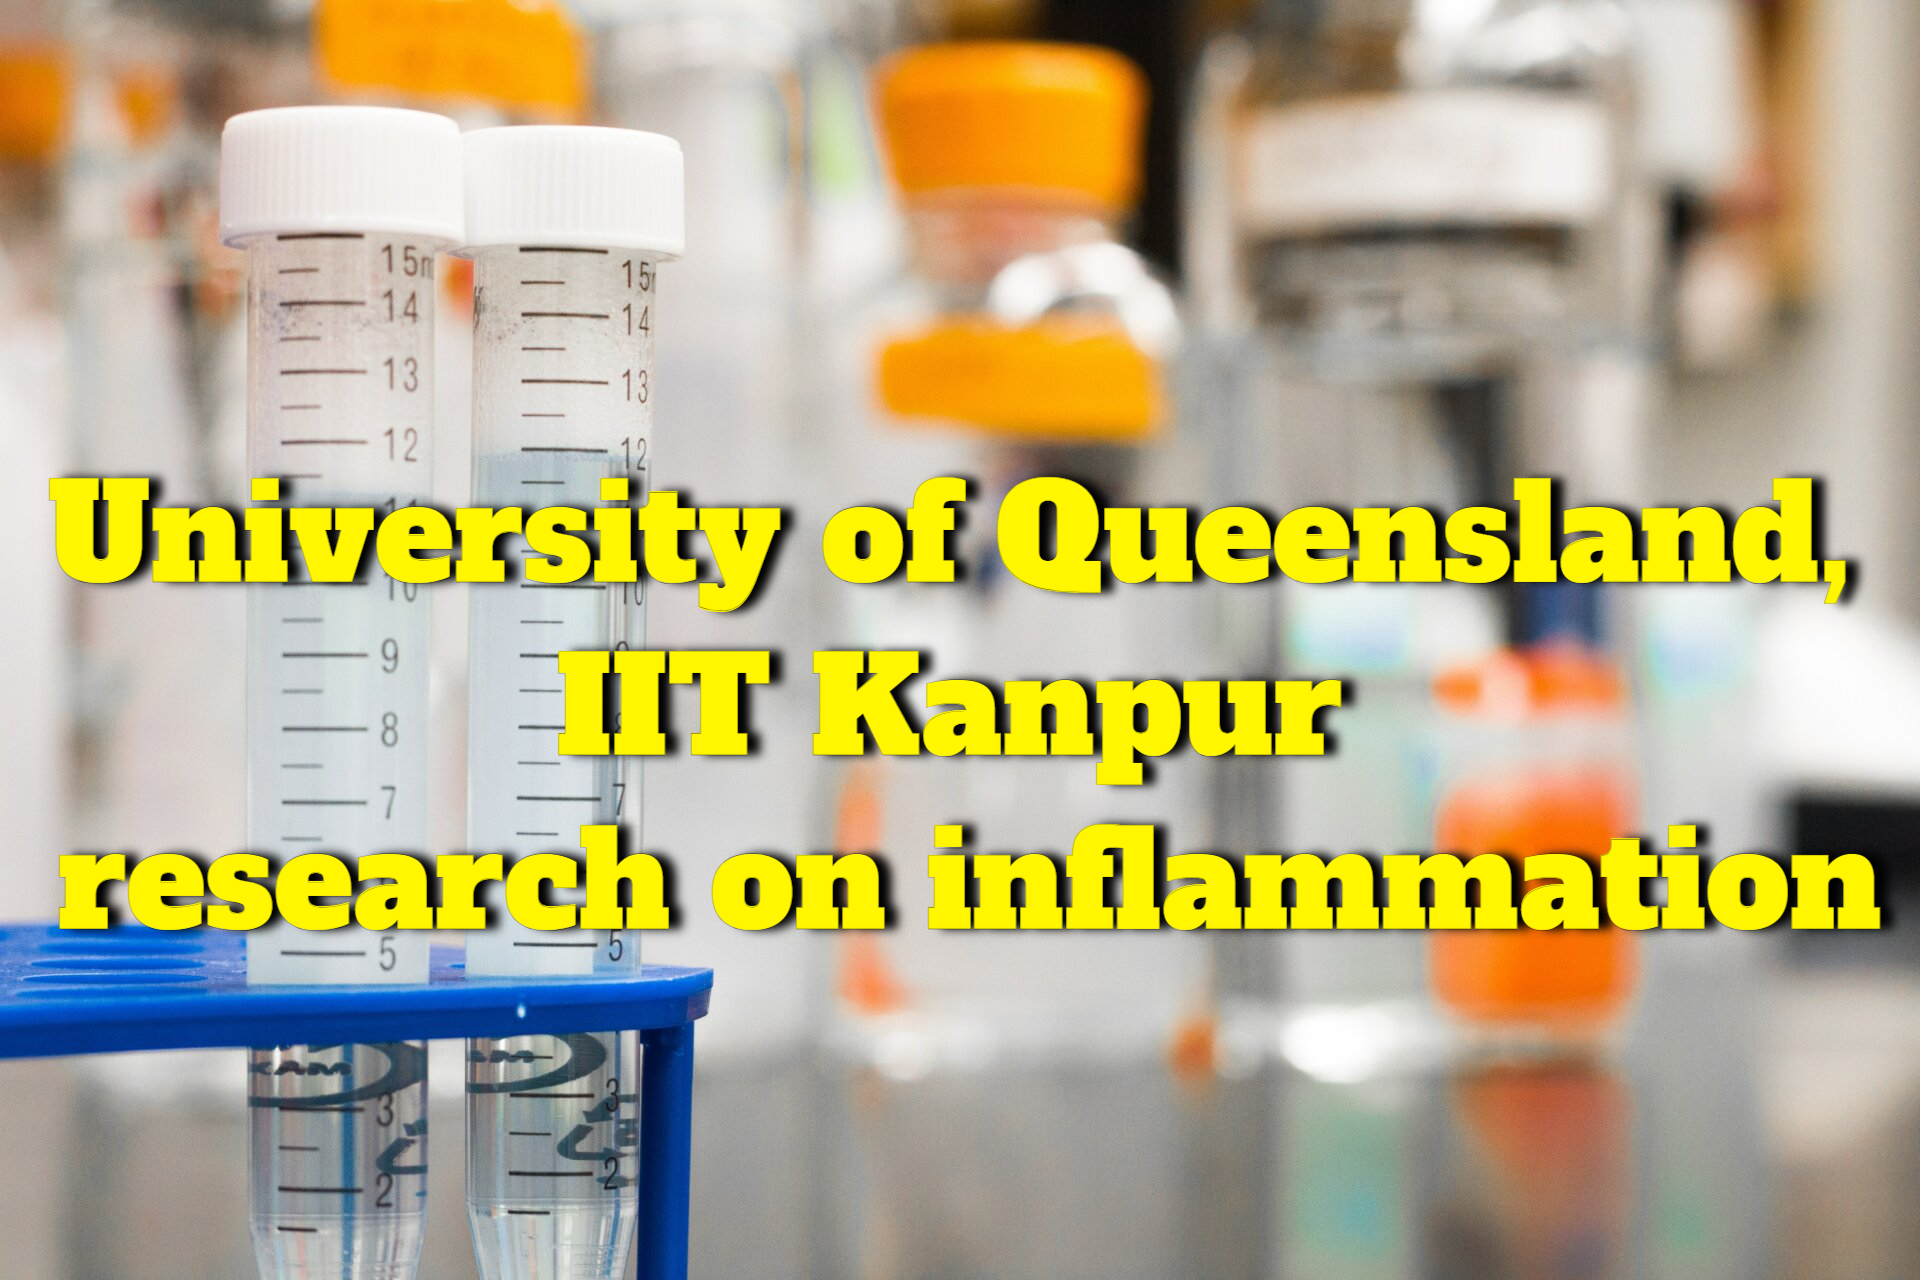 IIT Kanpur, University of Queensland, conduct pathbreaking work on inflammatory diseases